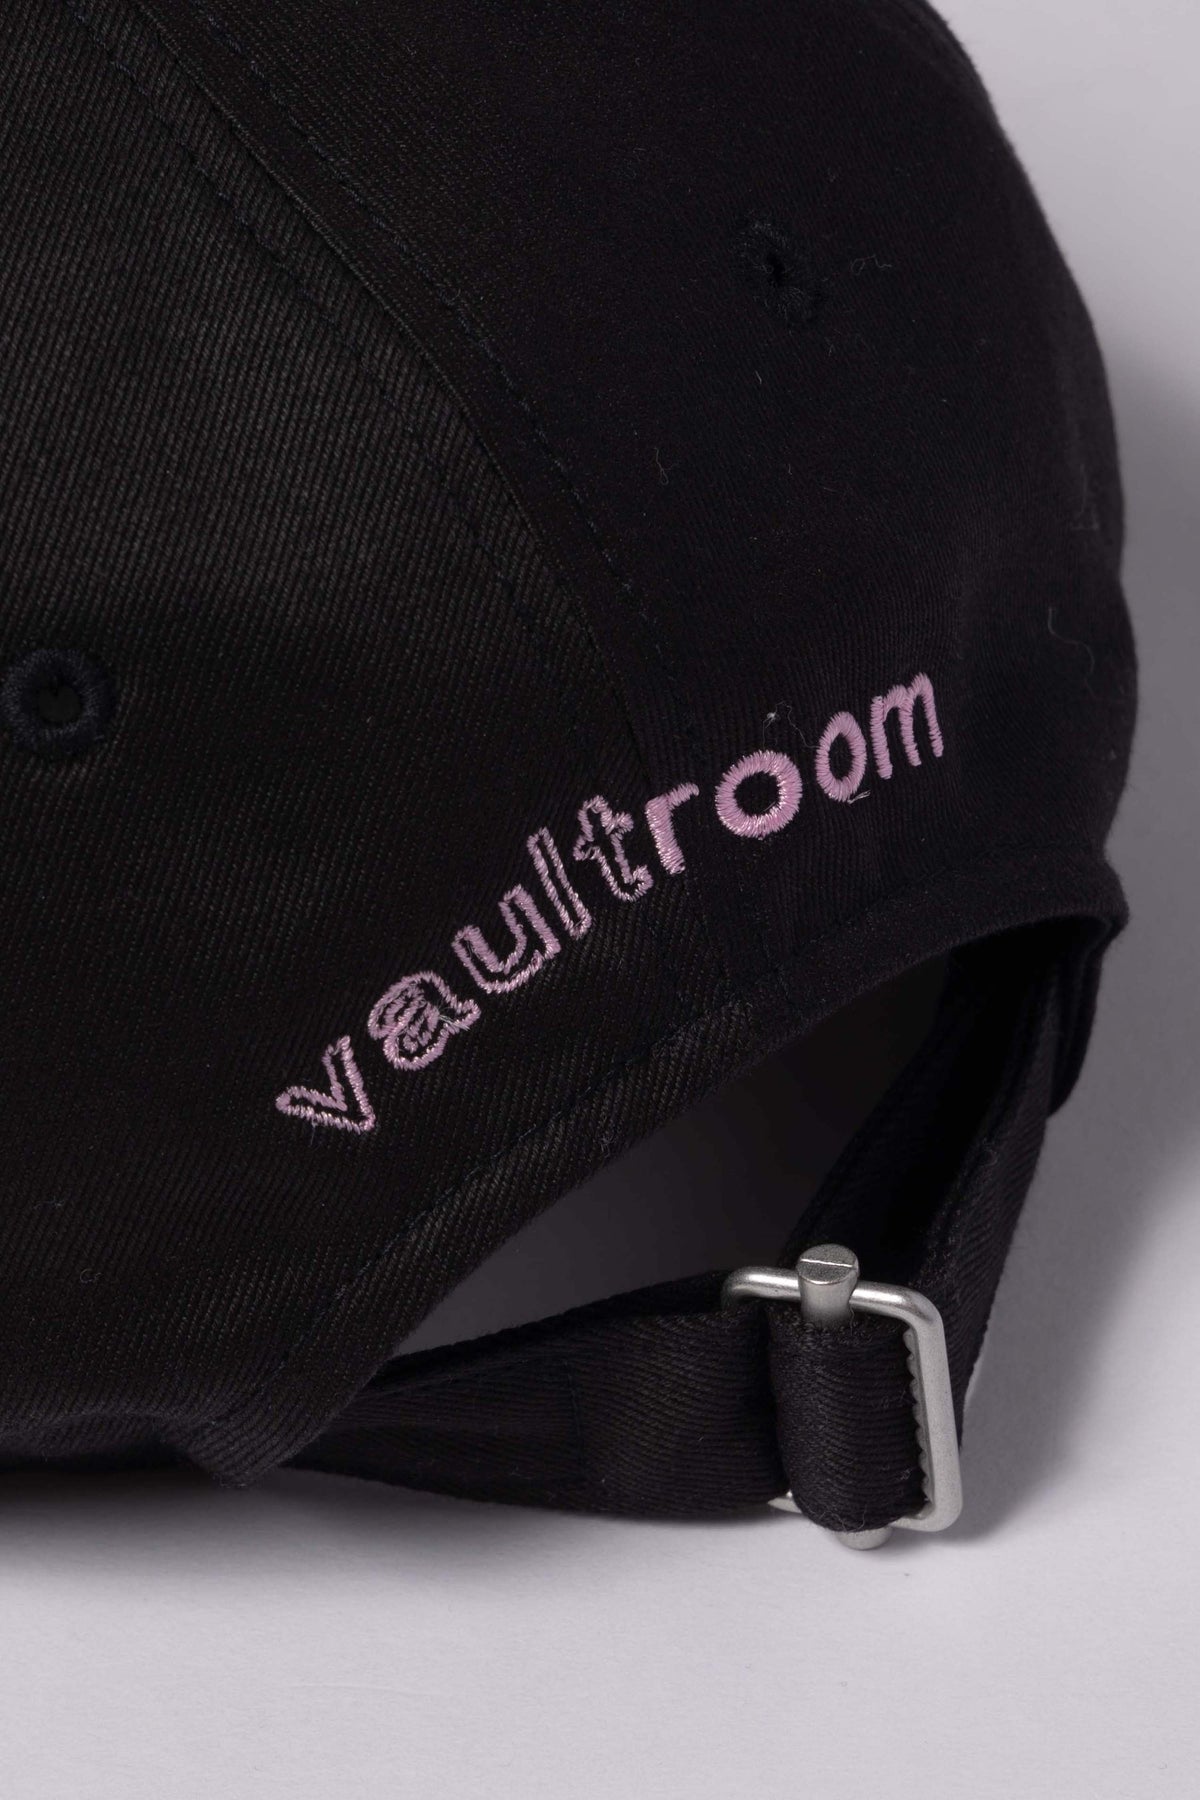 YAH3 CAP / BLK – VAULTROOM